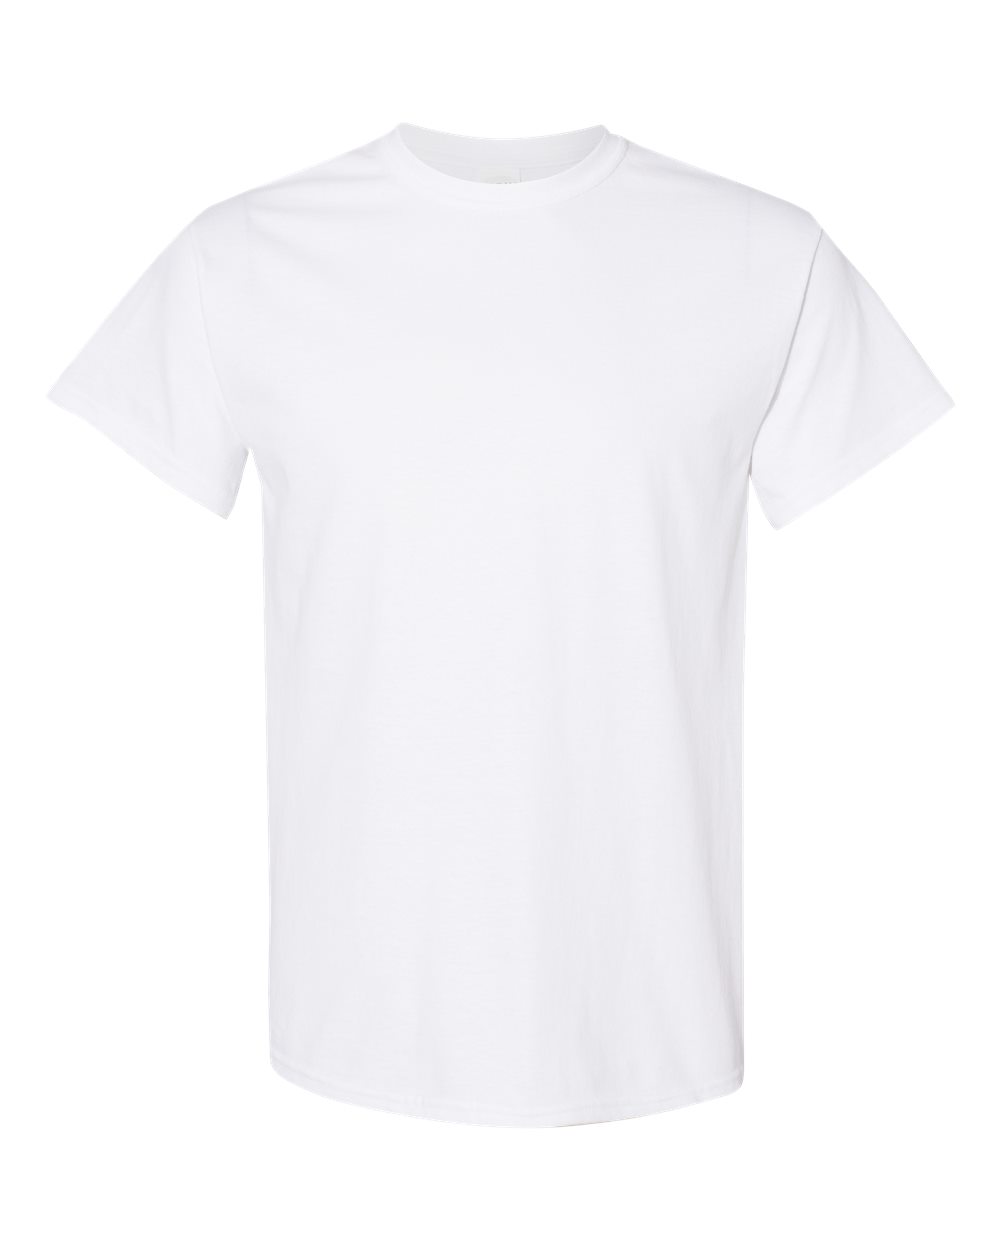 white raglan shirt